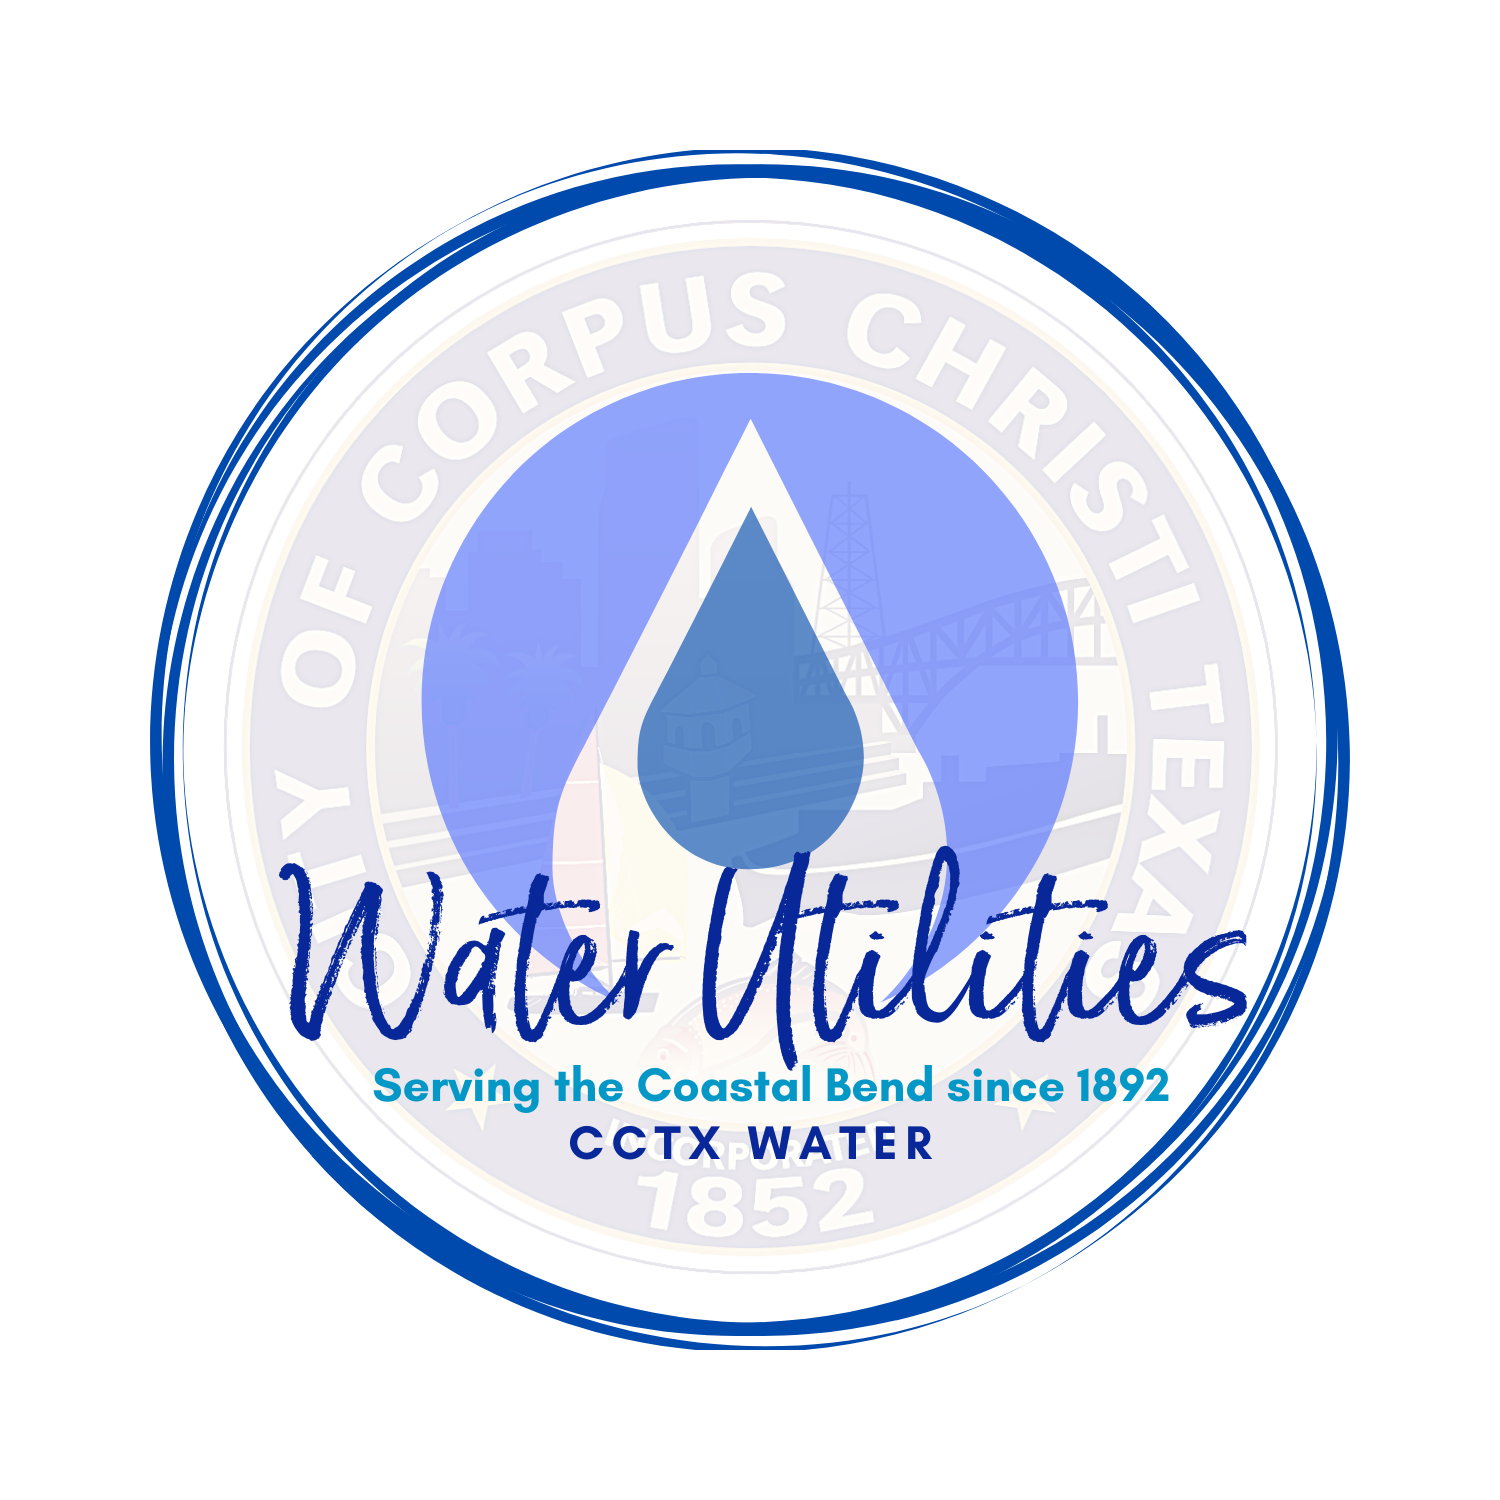 City of Corpus Christi Water Utilities